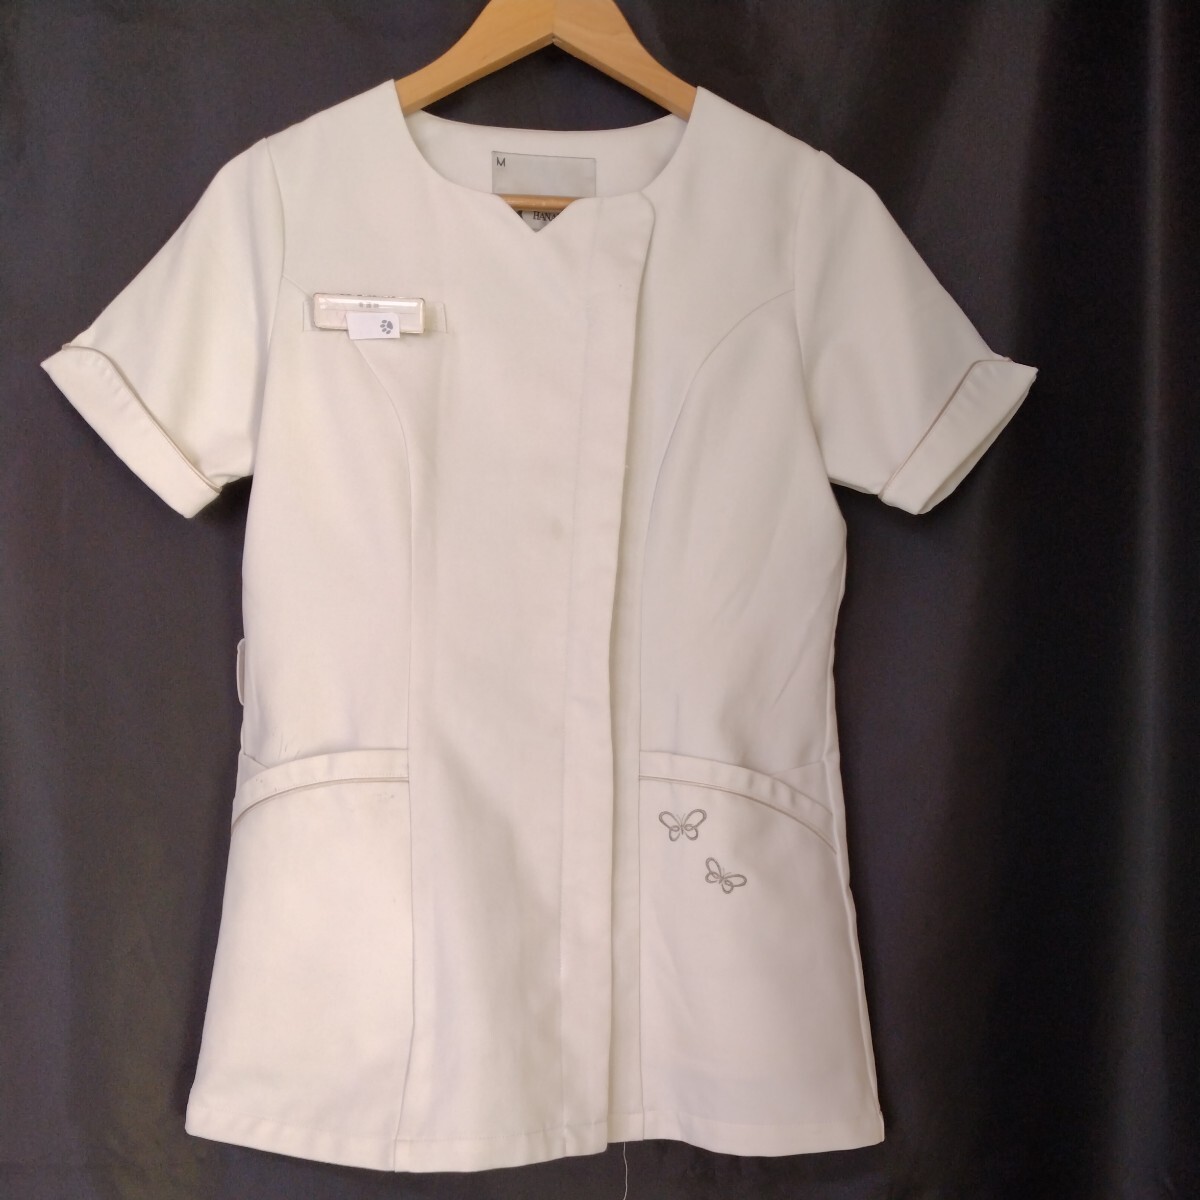  is na emo li short sleeves nurse wear size M white front opening Heart neck jacket klinik medical care white garment costume 